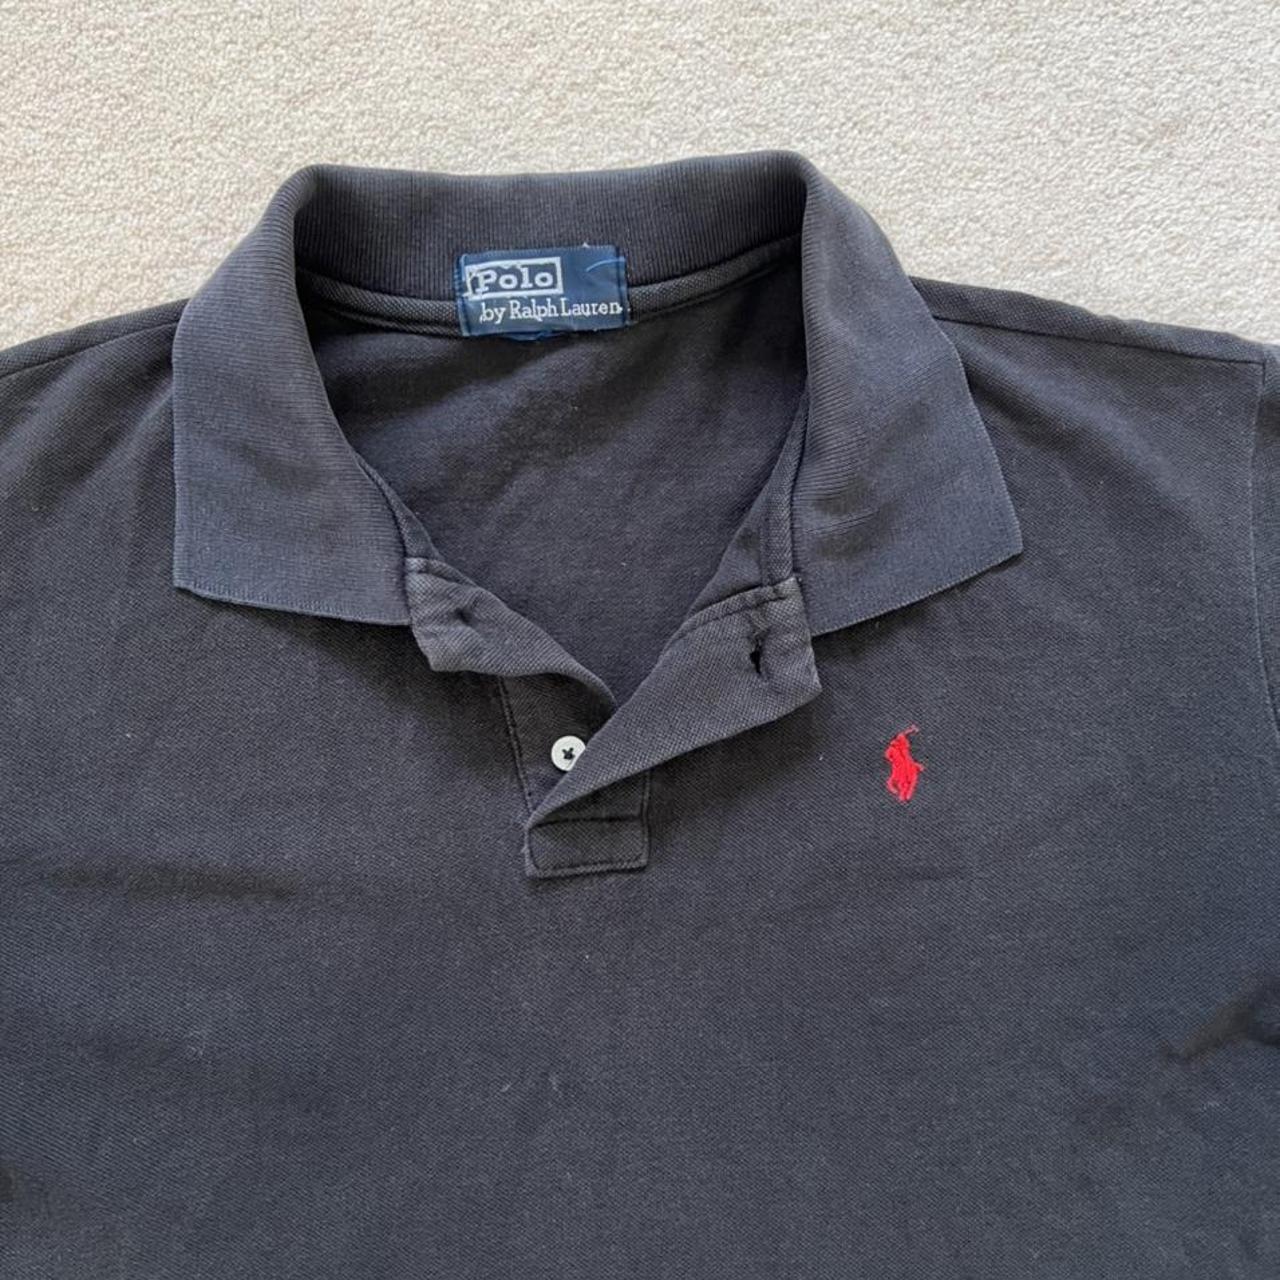 Vintage Polo Ralph Lauren black shirt with red logo... - Depop